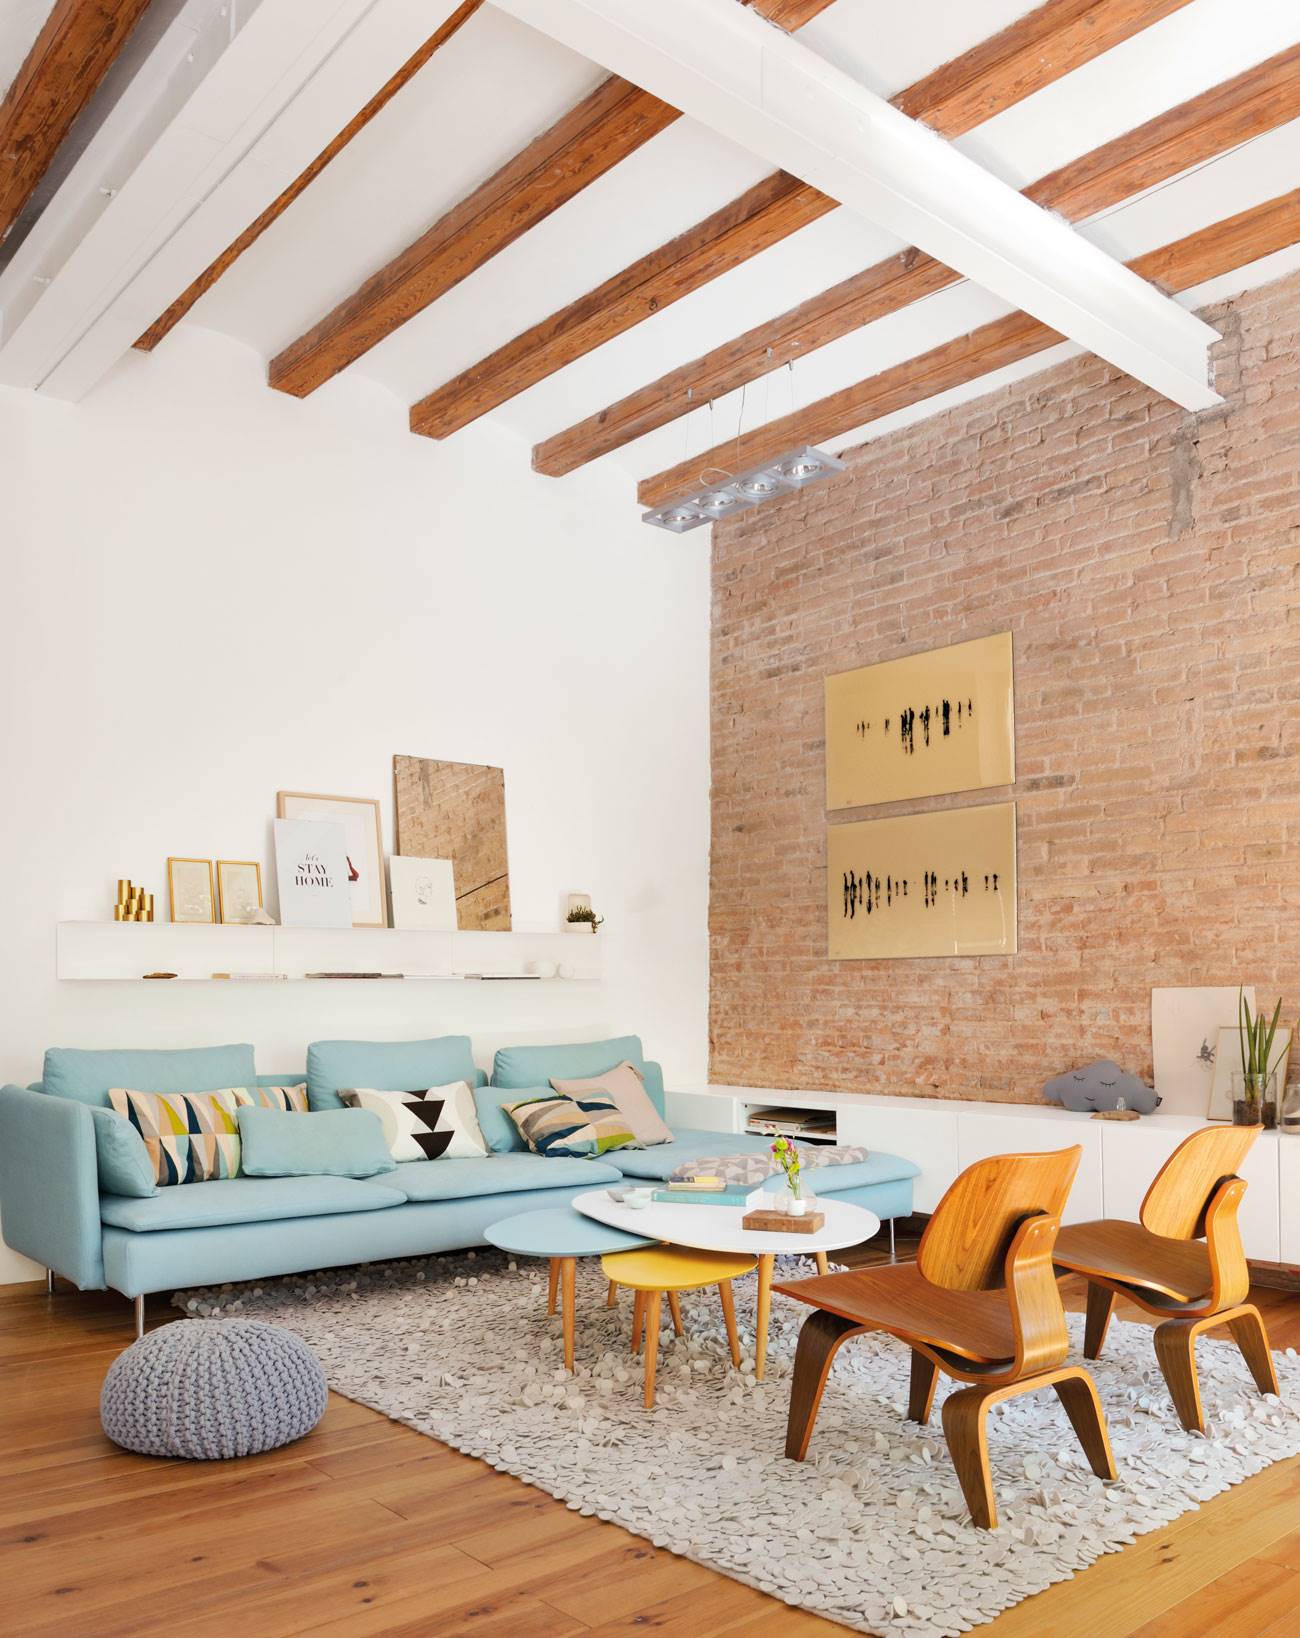 Salón moderno con pared de ladrillo, alfombra, suelo de madera y vigas. Sofá azul claro con chaise longue.